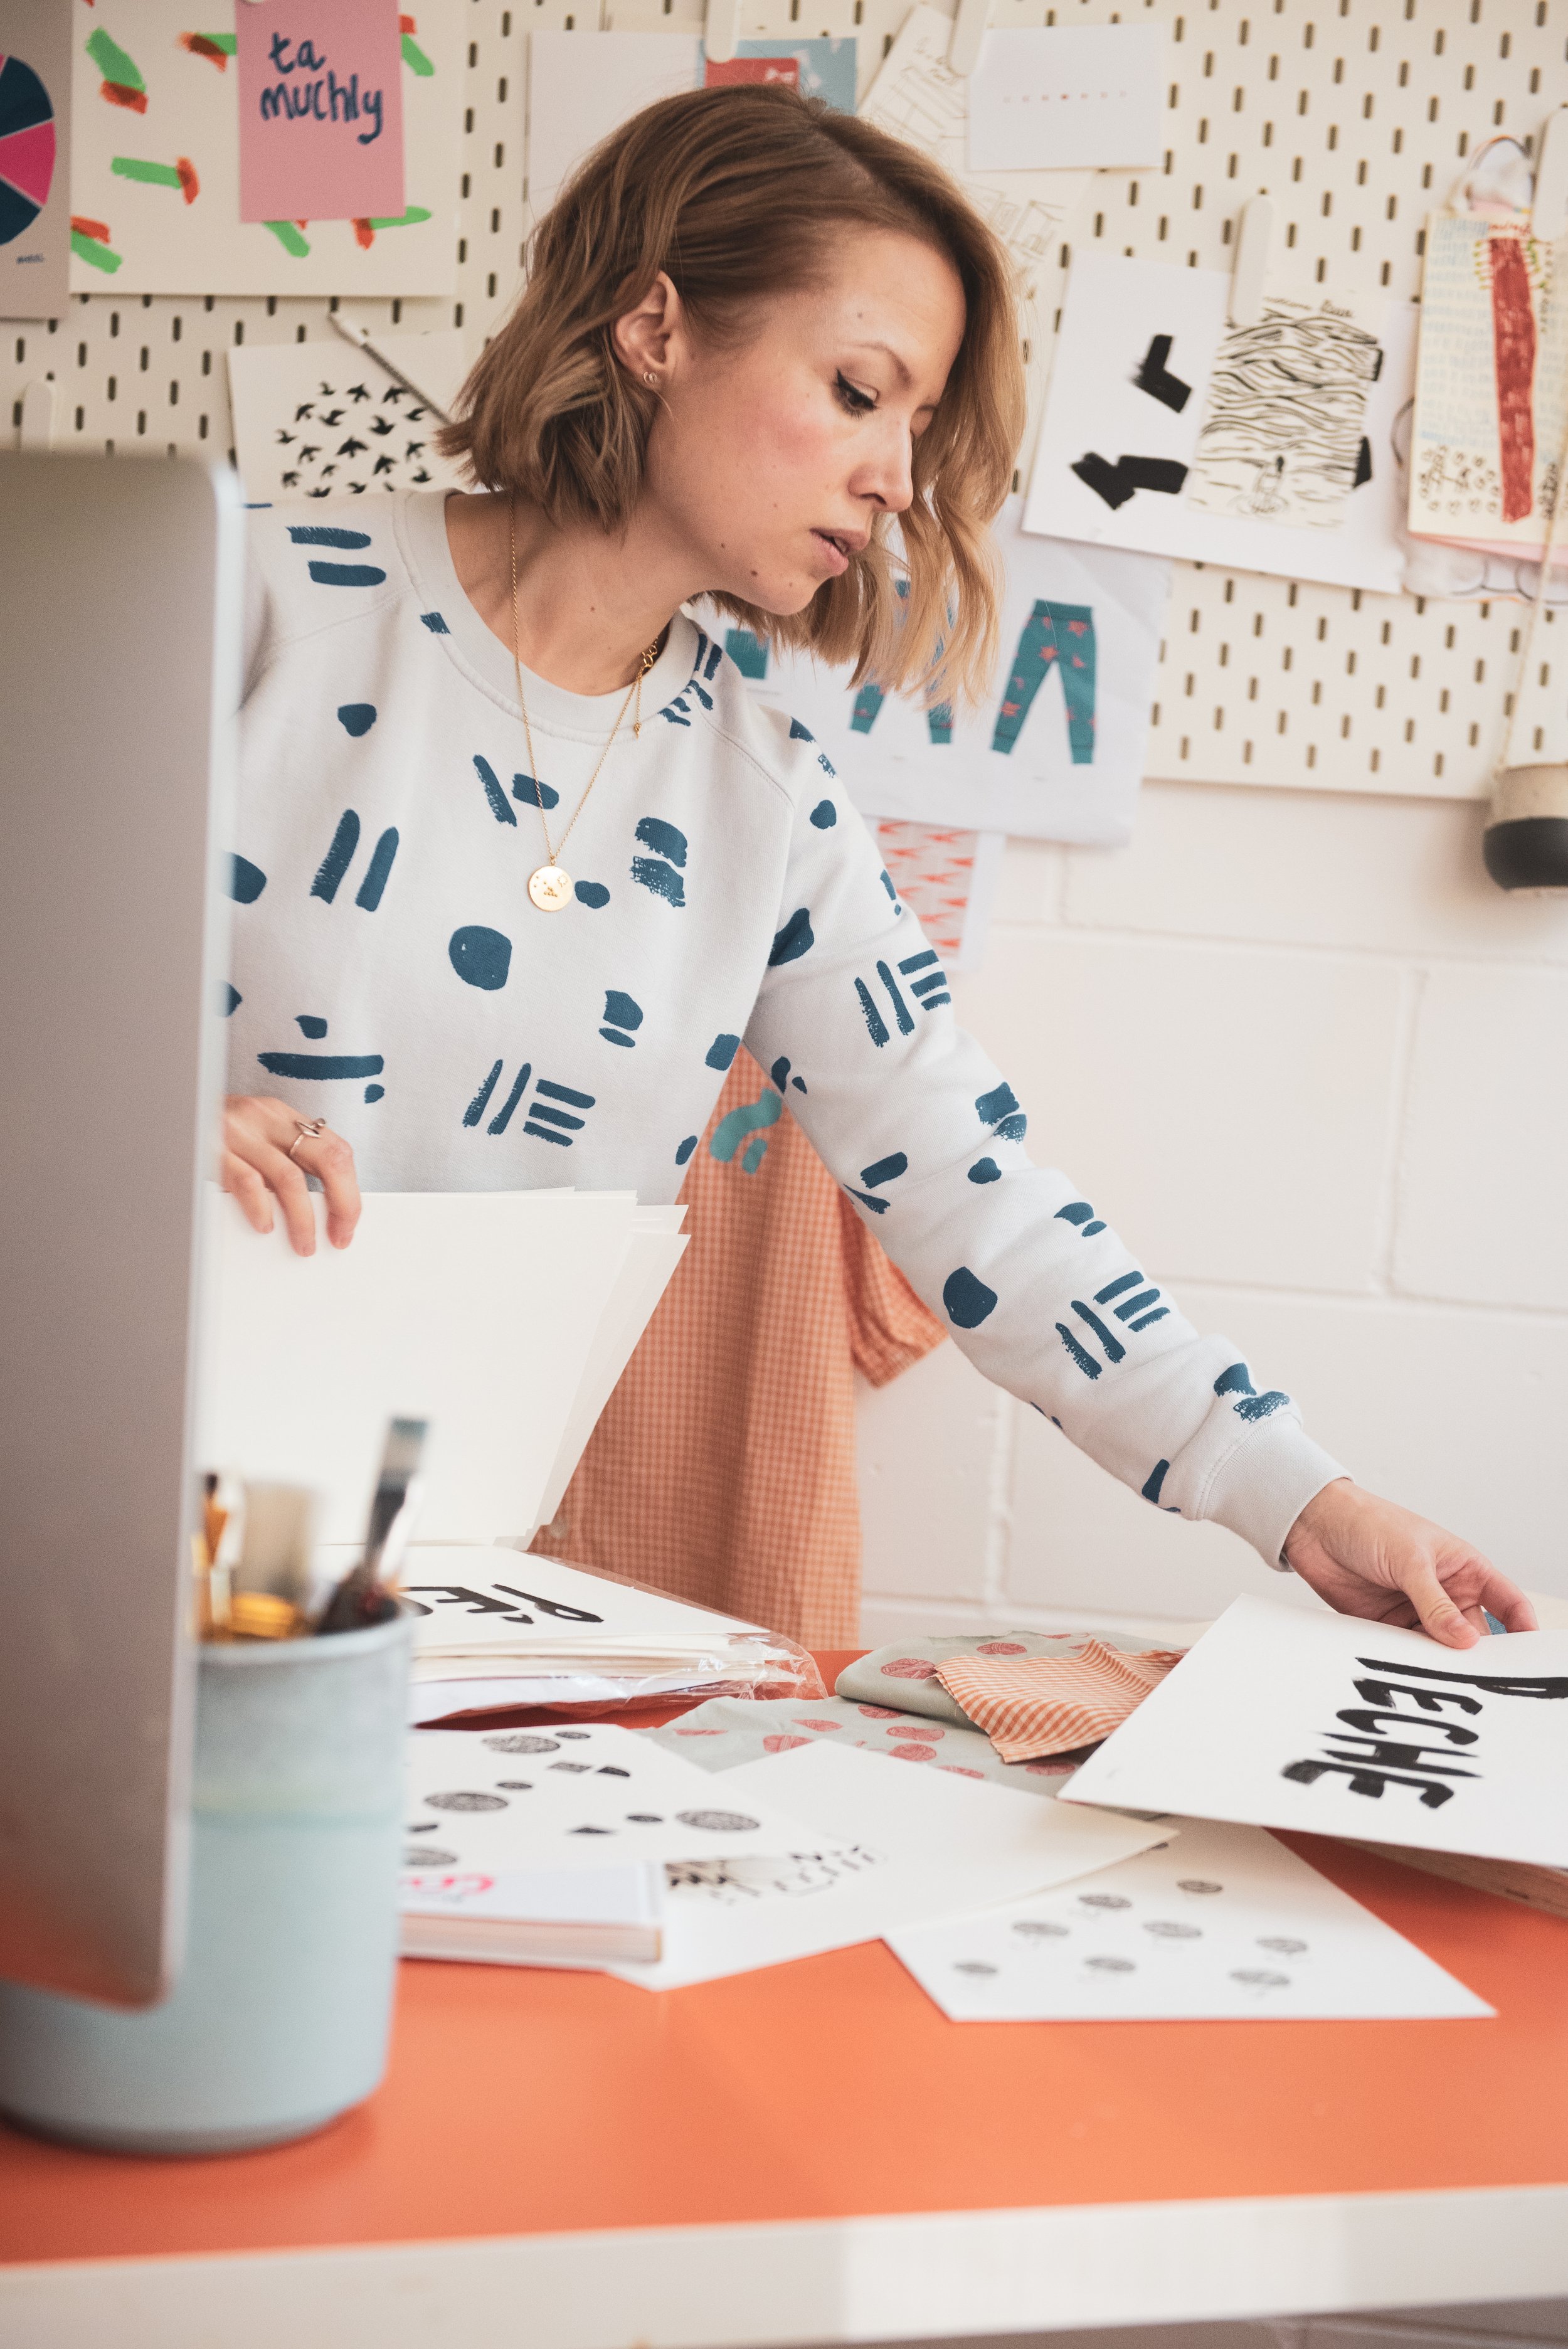 Maker Sarah Birchall of Cub and Pudding wears graphic sweatshirt in her studio